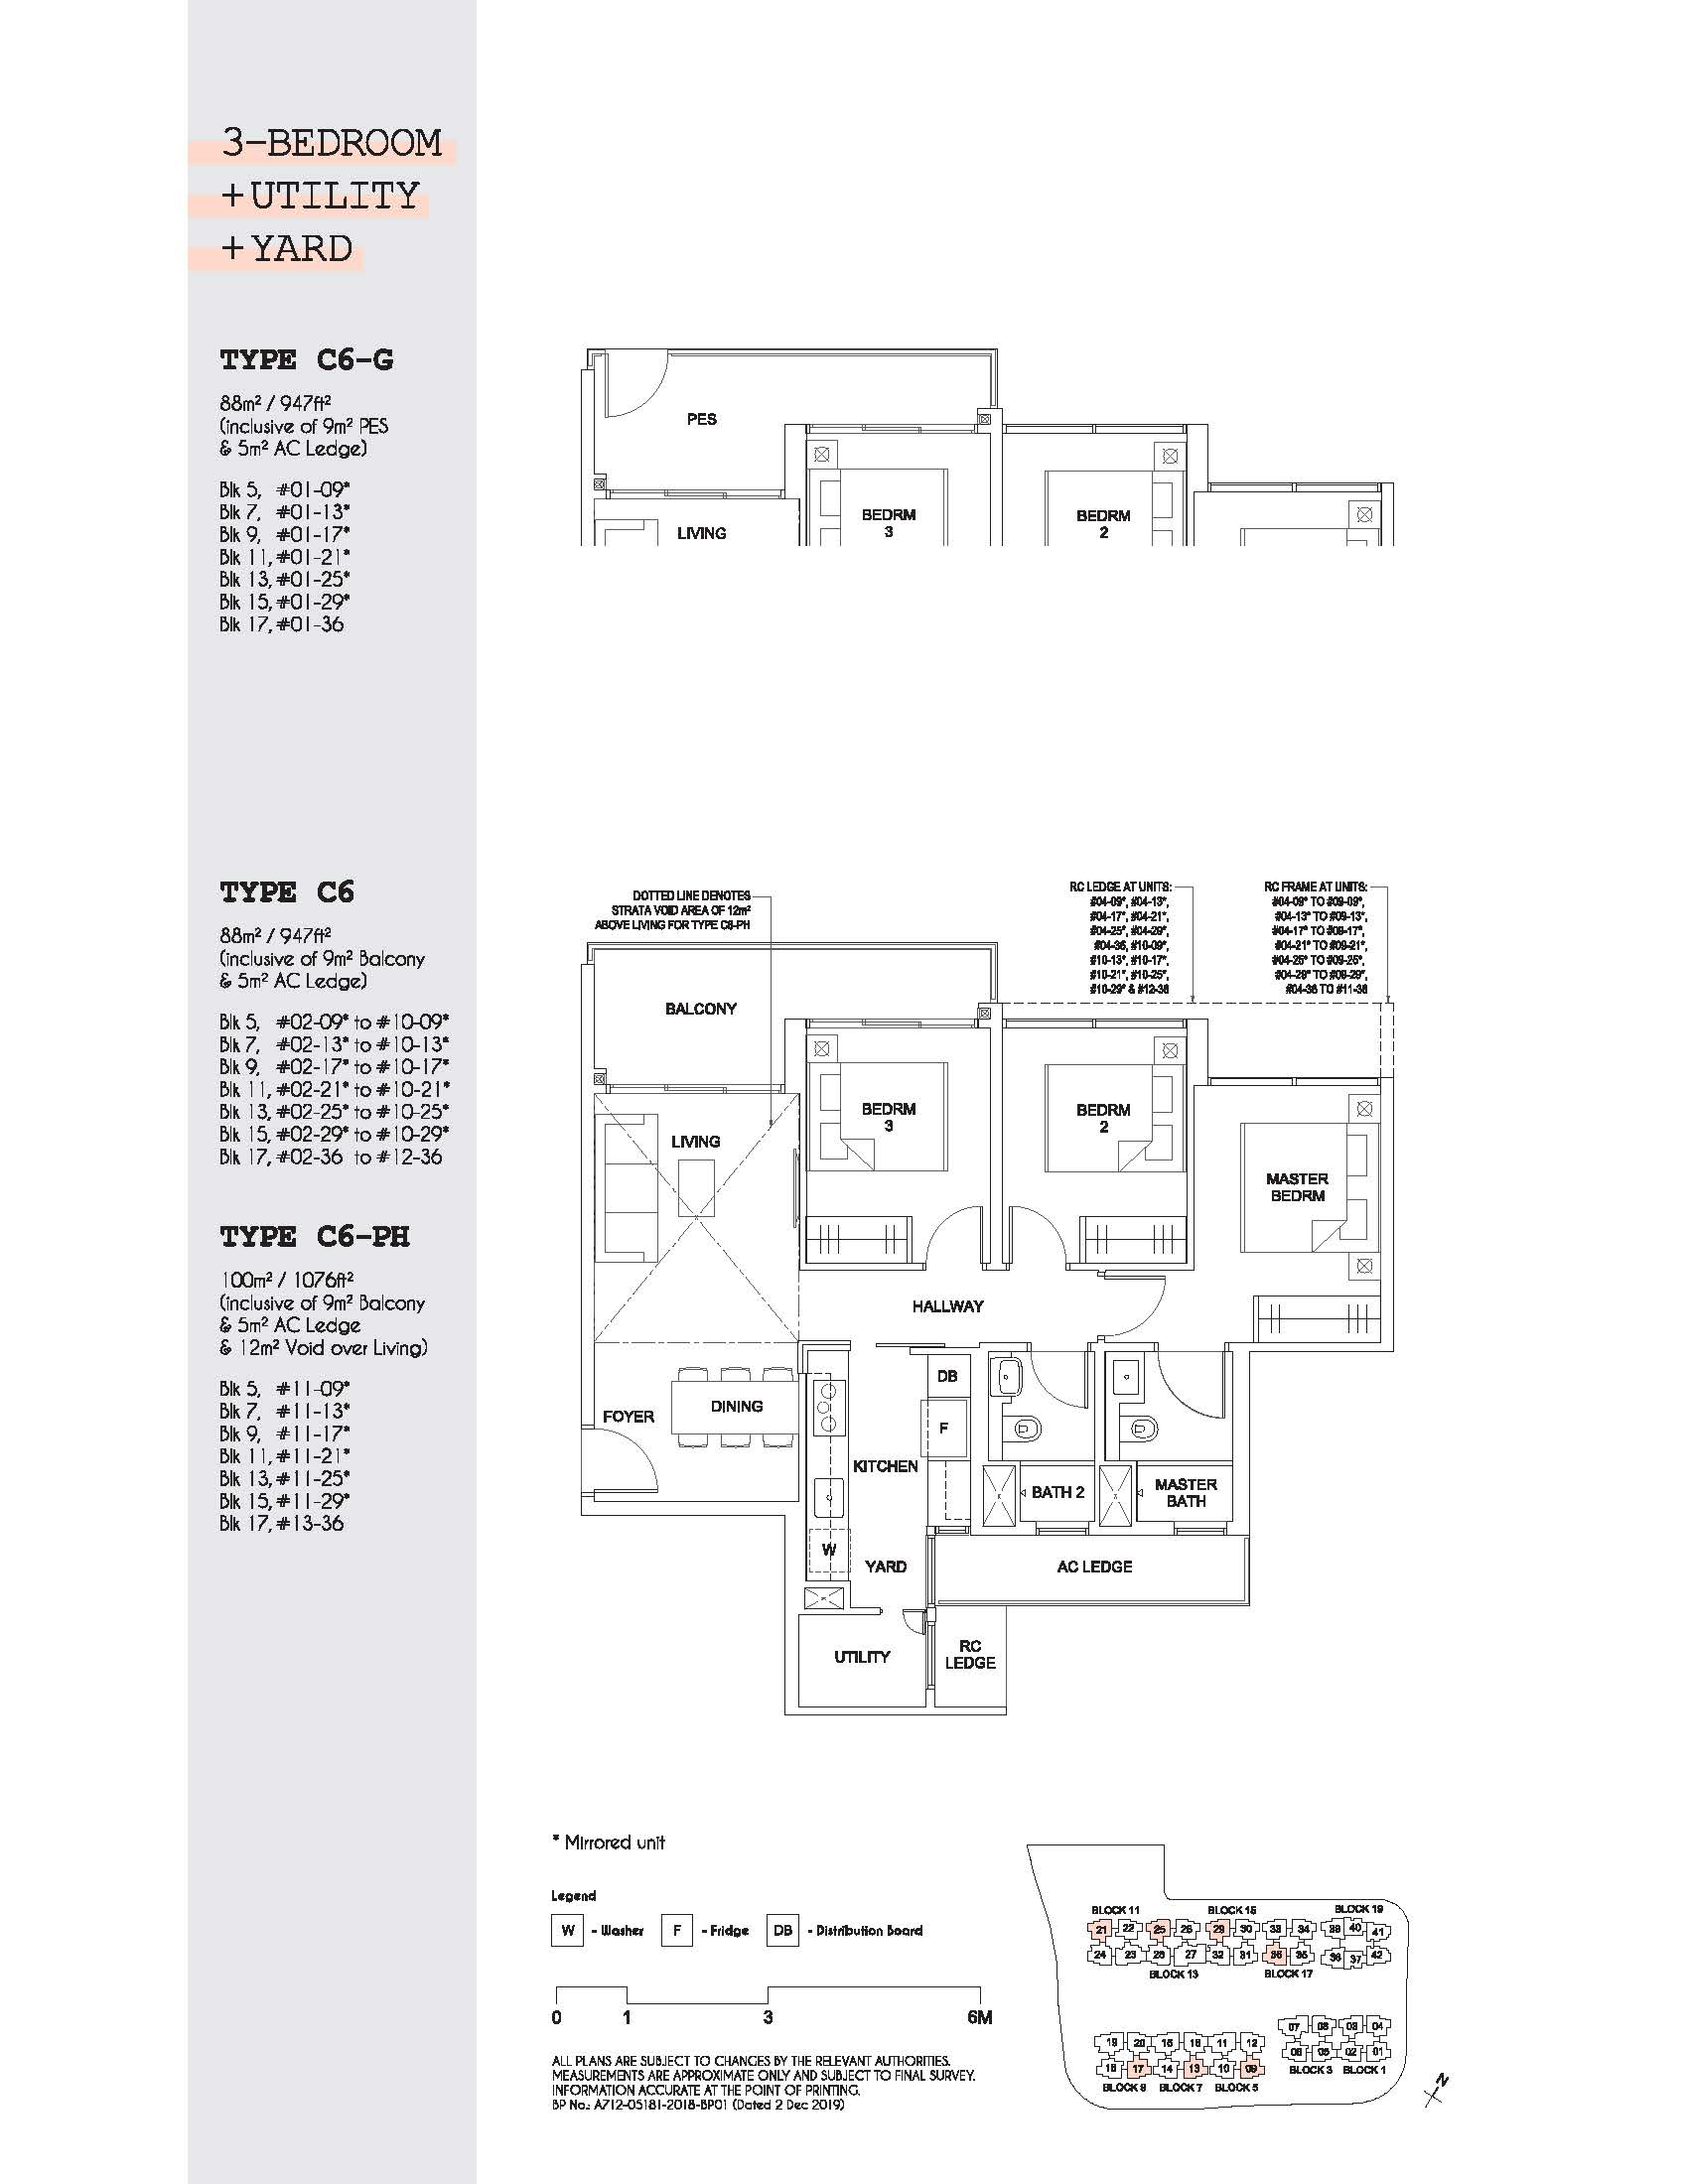 Parc_Canberra - 3-Bedroom + Utility + Yard - Type C6 (947sqft)